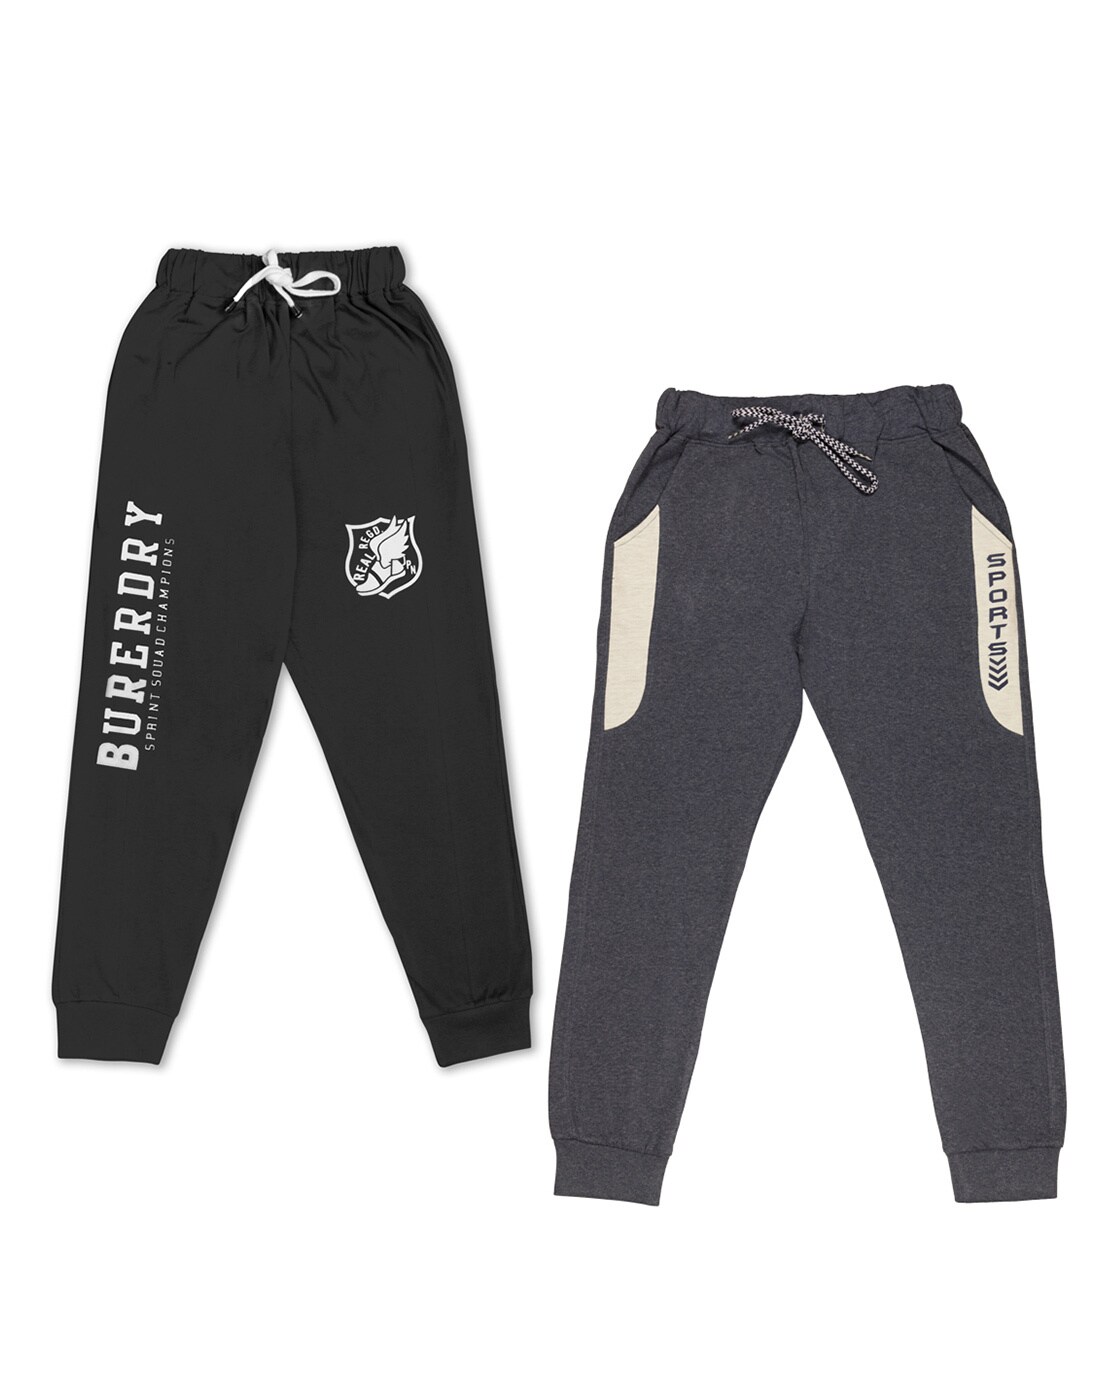 Buy Black & Grey Track Pants for Boys by Todd N Teen Online | Ajio.com